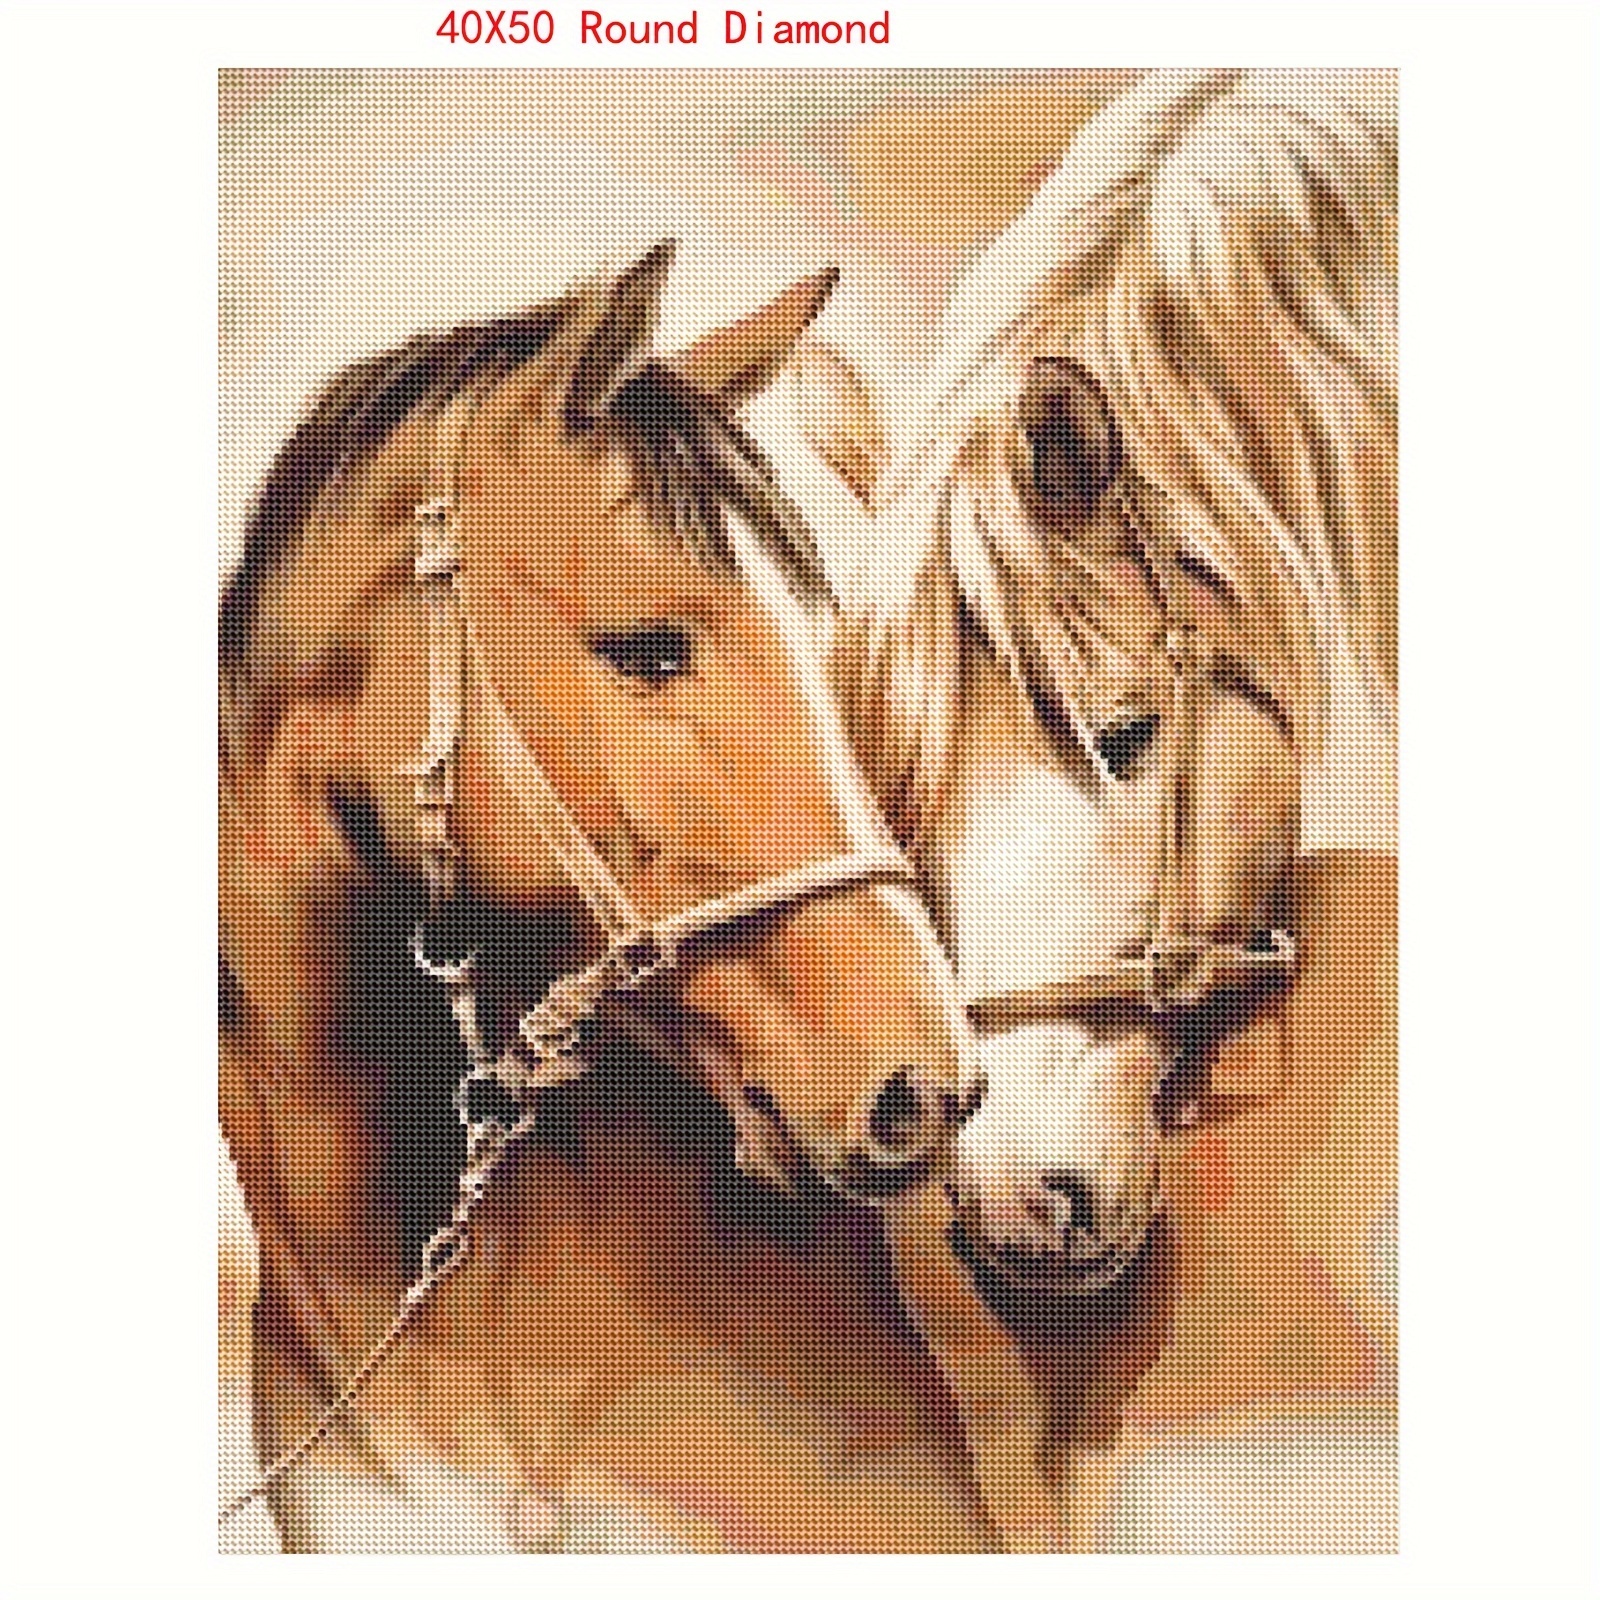 5D DIY Diamond Painting Horse Mosaic Art Diamond Embroidery Animal Full  Diamond Picture Rhinestone Cross Stitch Home Decor Gift